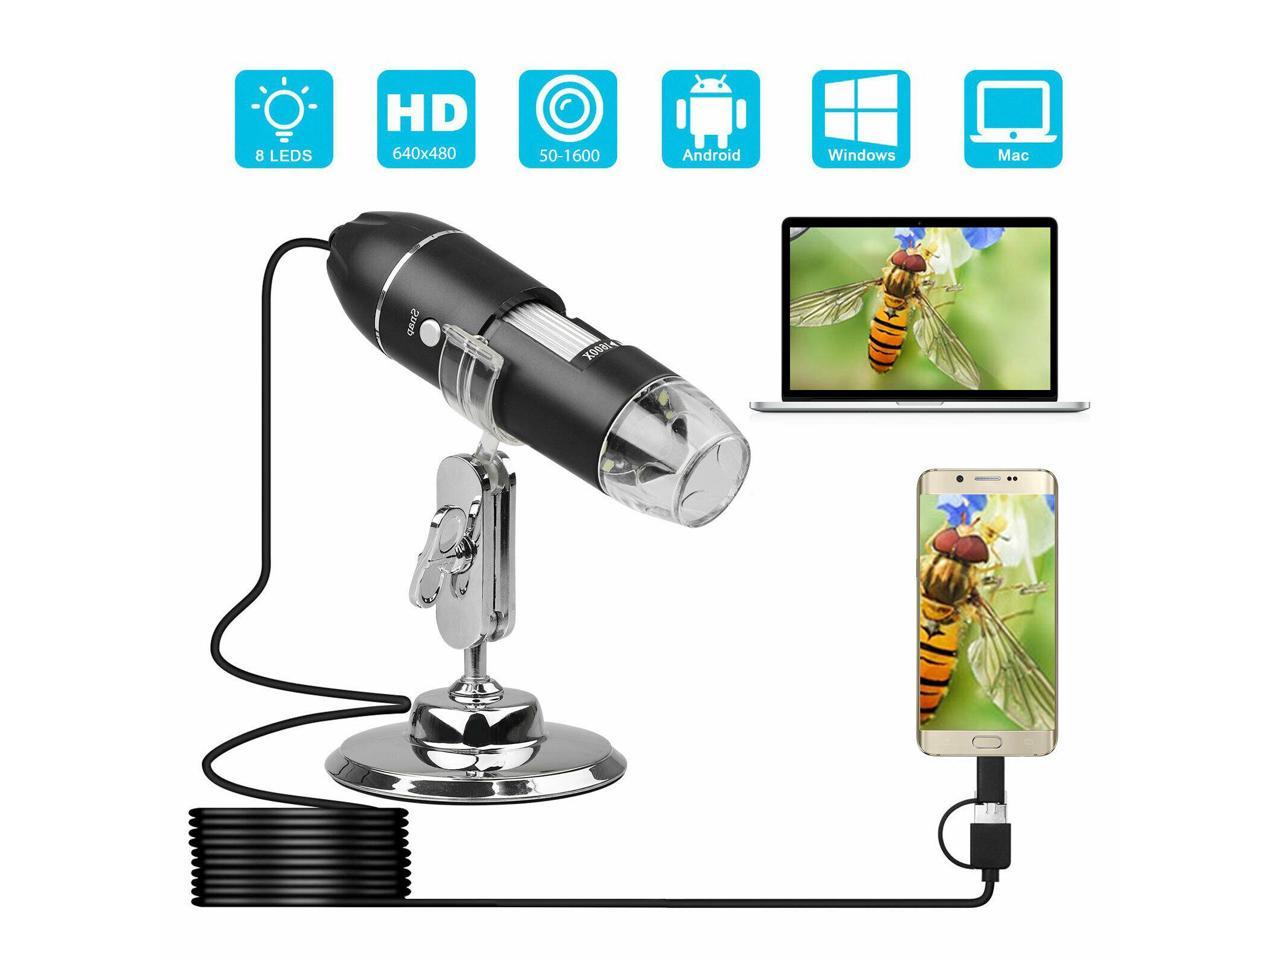 1600x Camera 8 LED OTG Endoscope USB Digital Microscope Magnificon w/ Stand